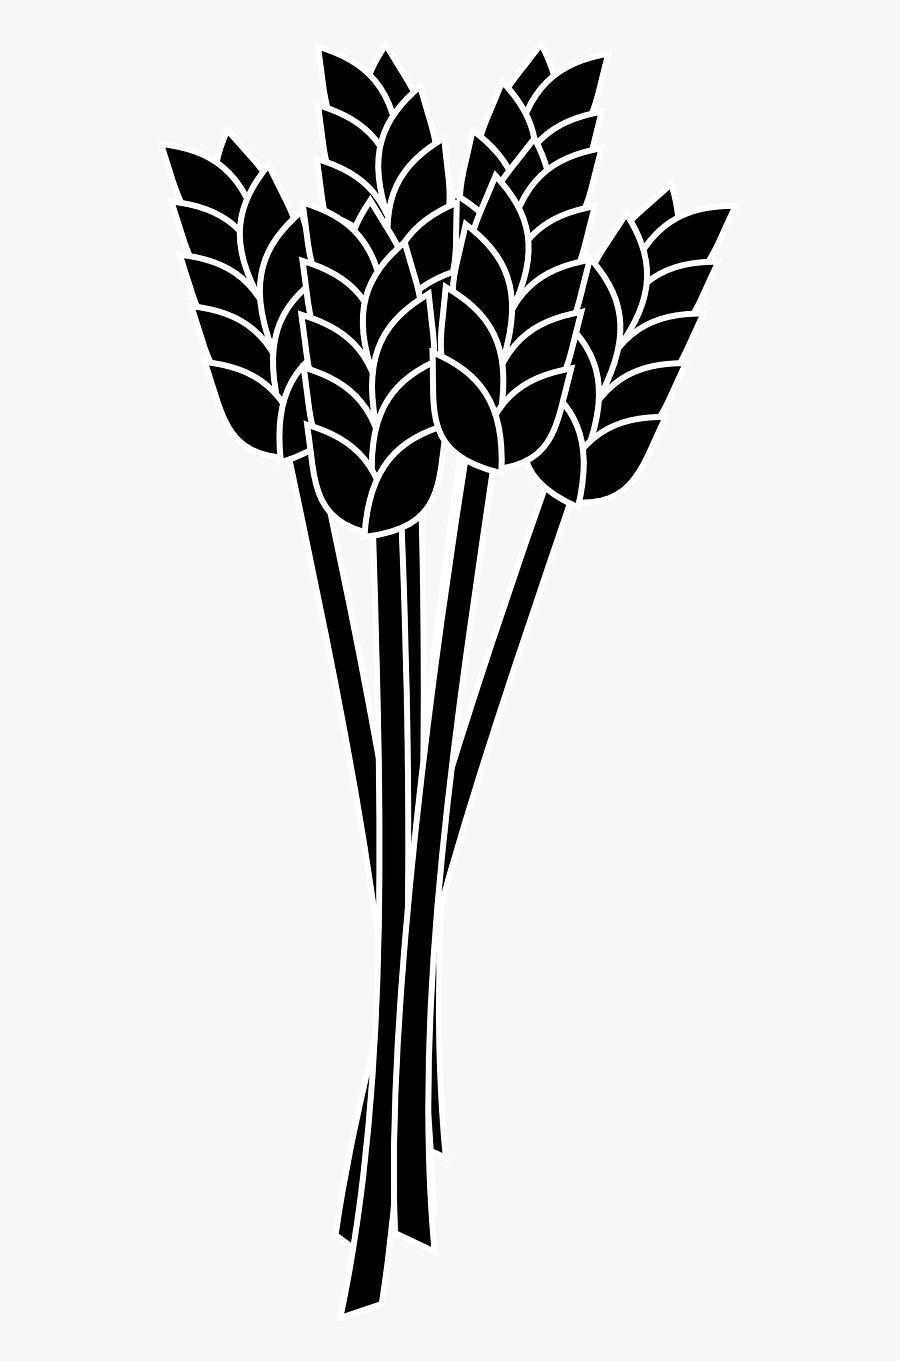 Wheat Spike Bunch Grain - Soybean Clipart Black And White, Transparent Clipart